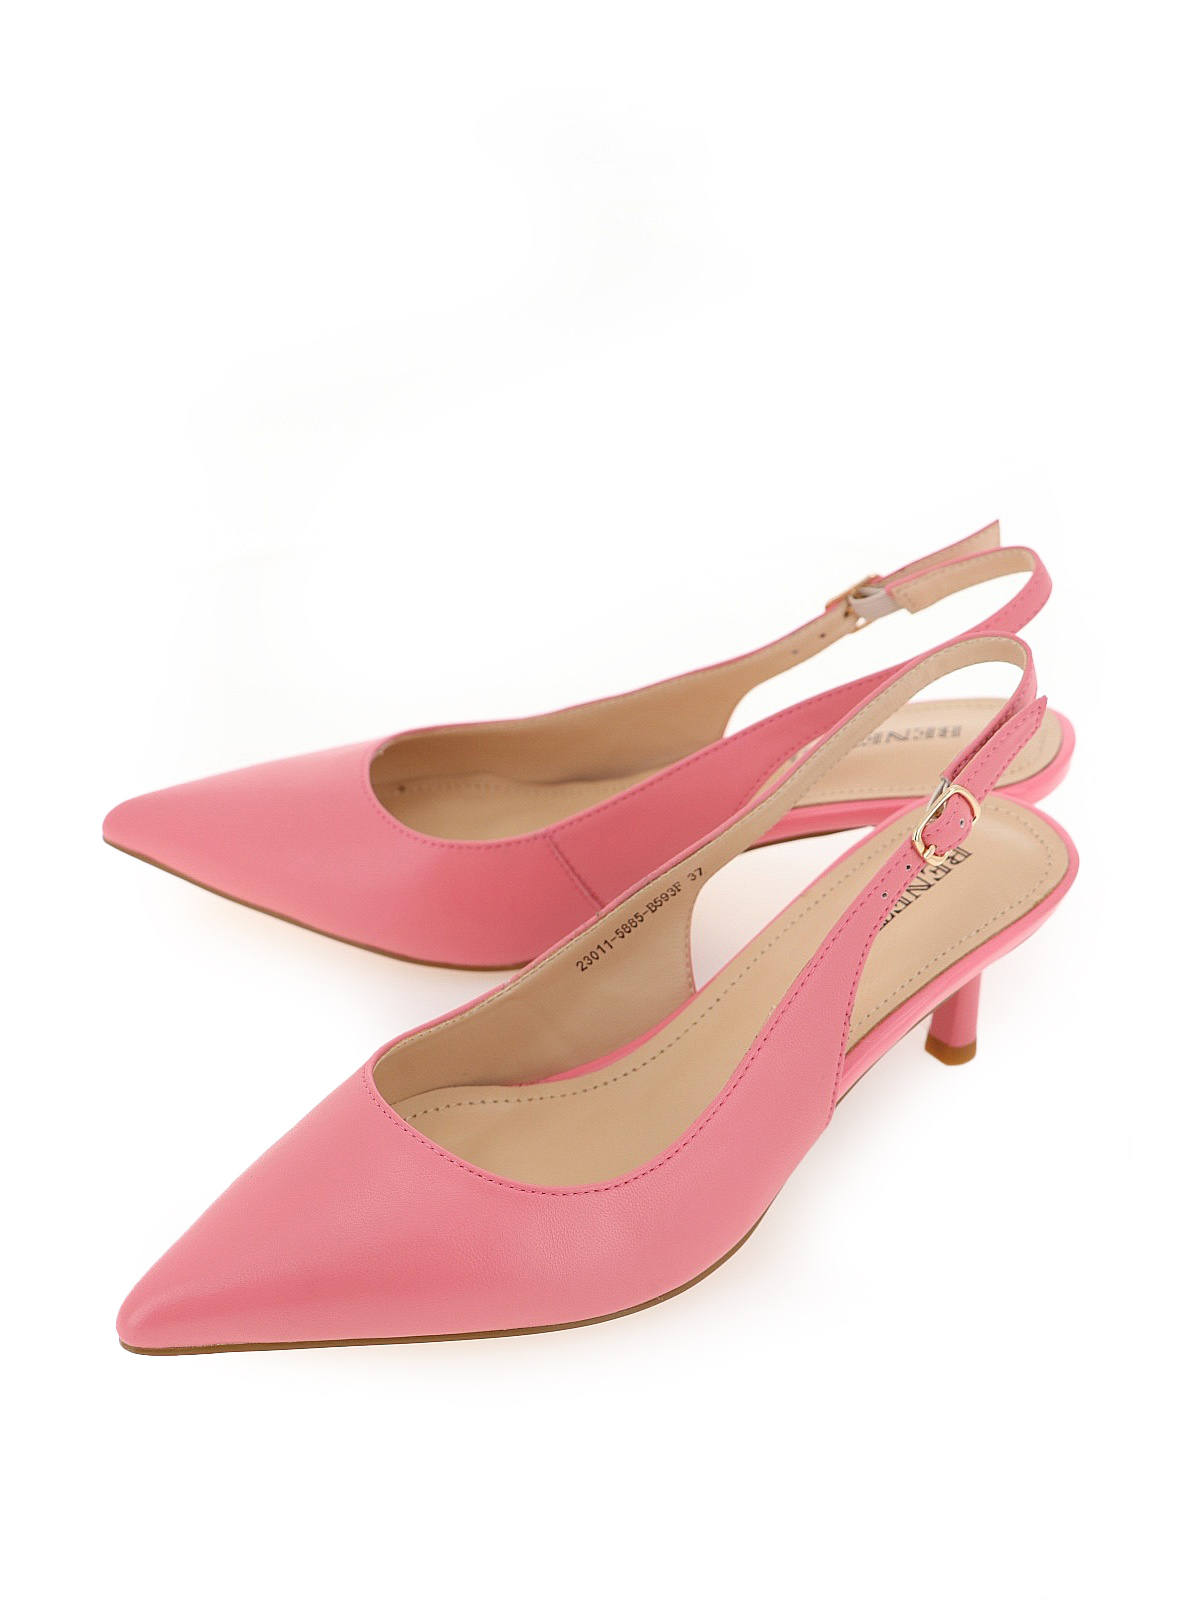 Туфли женские Benetti 23011-5885-B593F розовые 40 RU